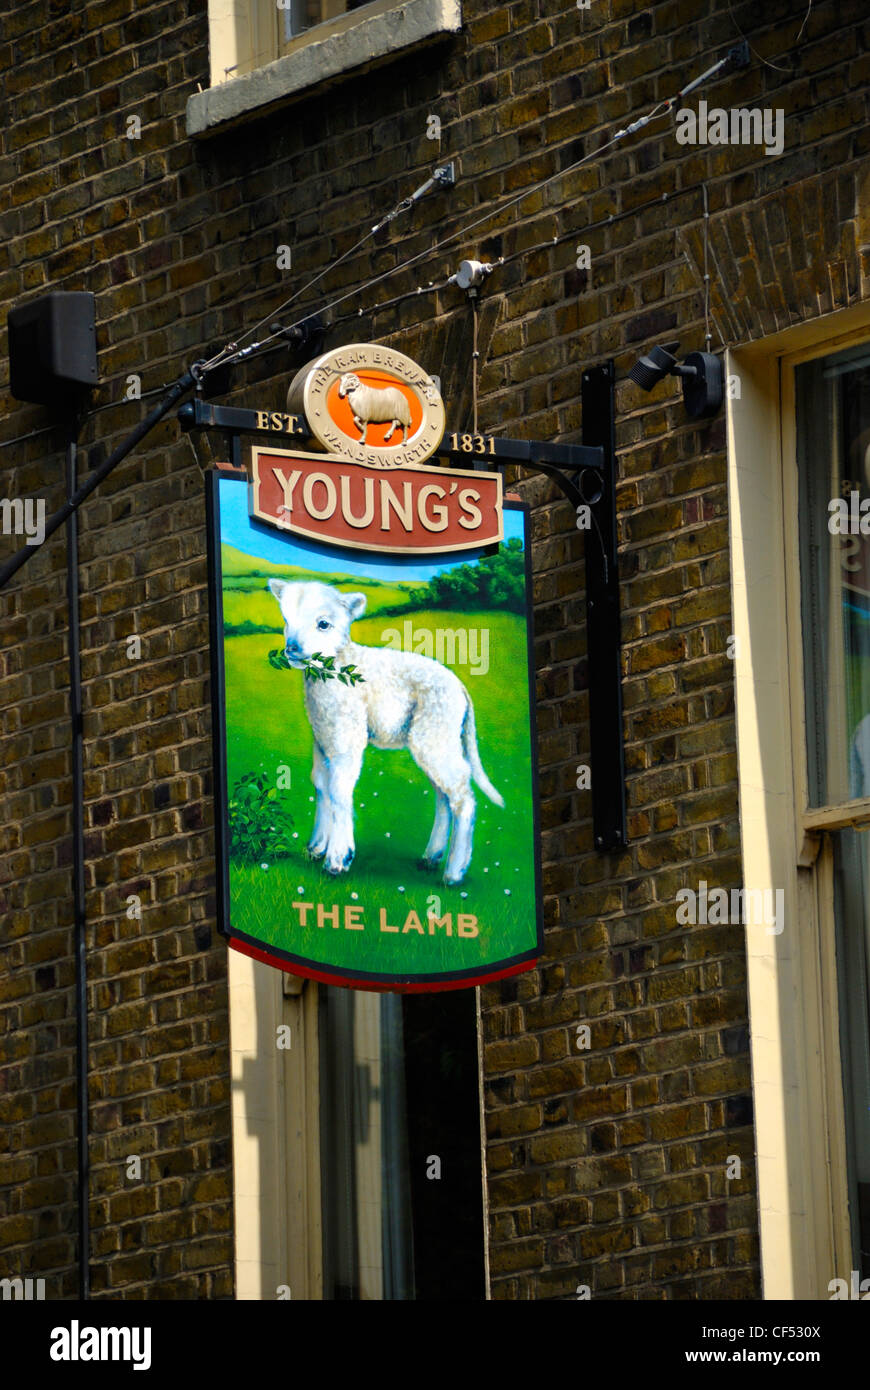 The Lamb pub sign in Lamb's Conduit Street. Stock Photo